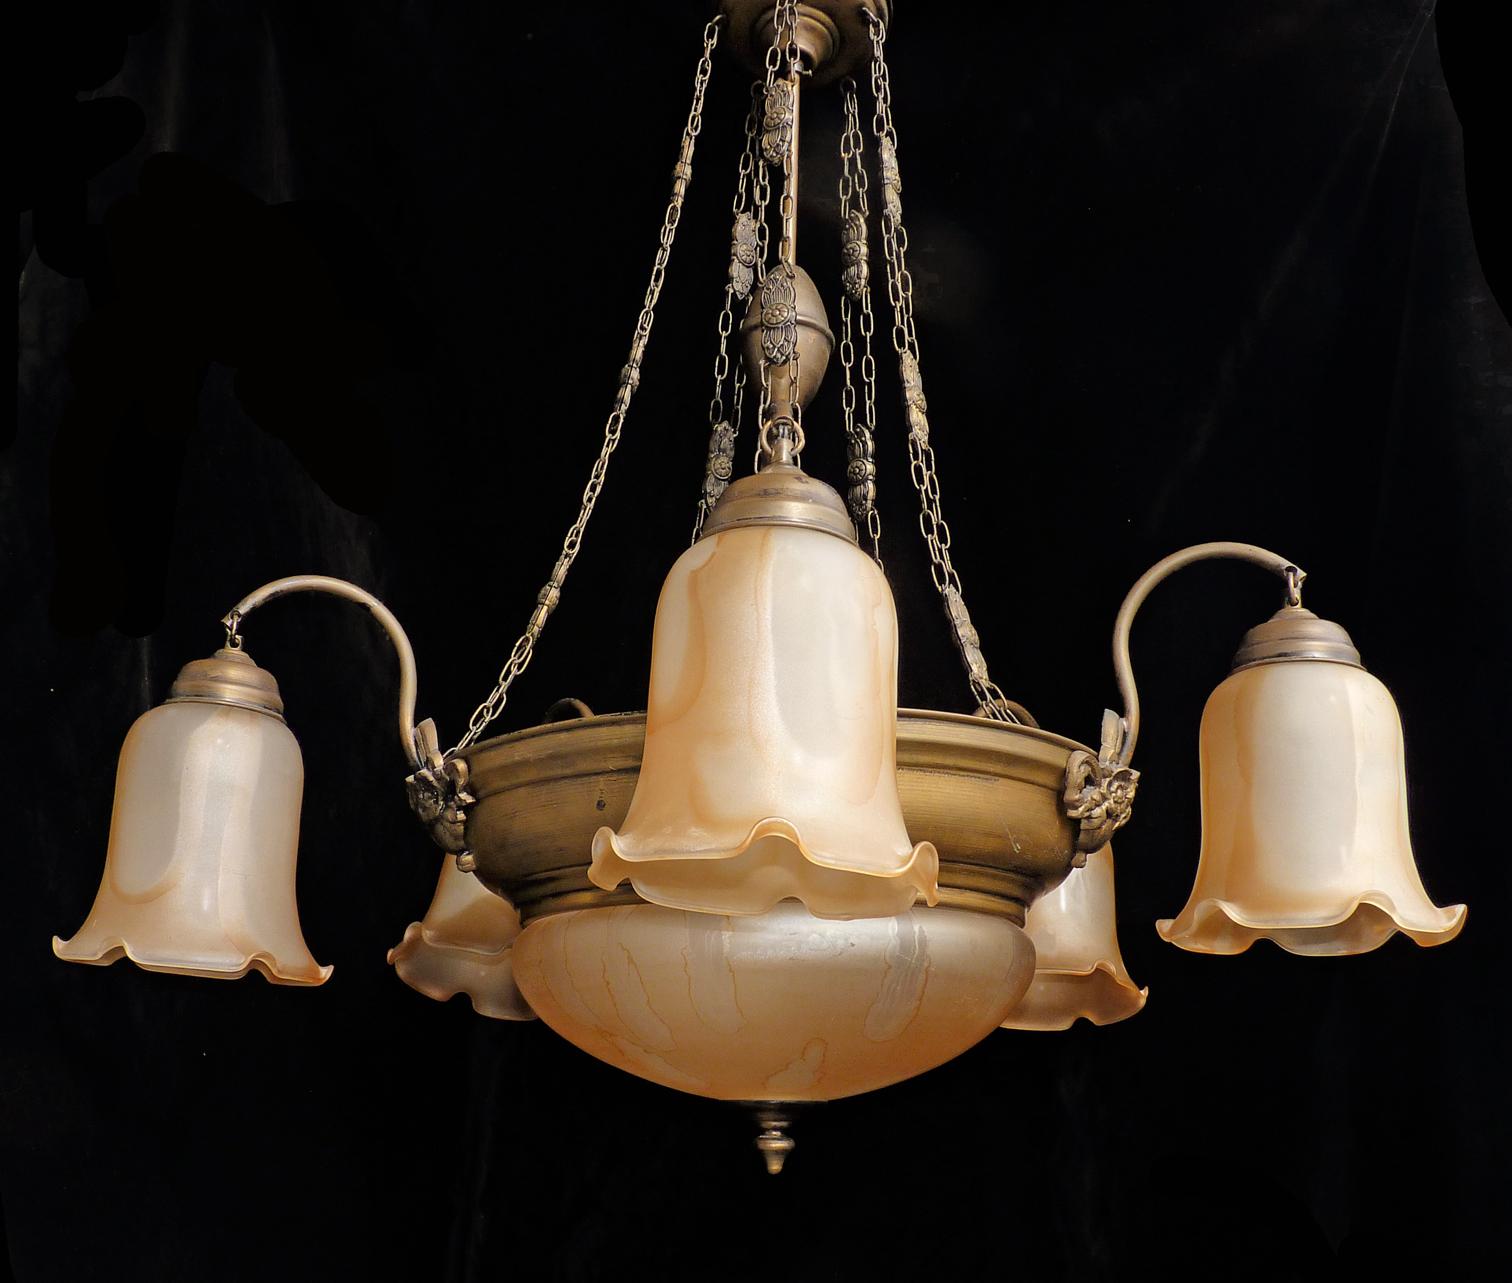 French Art Deco amber glass seven-light chandelier, circa 1930.
Measure: 
Diameter 30 in / 76 cm
Height 33.9 in / 86 cm
Glass shades 6 in (15 cm) / 6 in (15 cm)
Bowl: 11.9 in (30 cm) / 6 in (15 cm)
Seven-light bulbs E 14
Good working